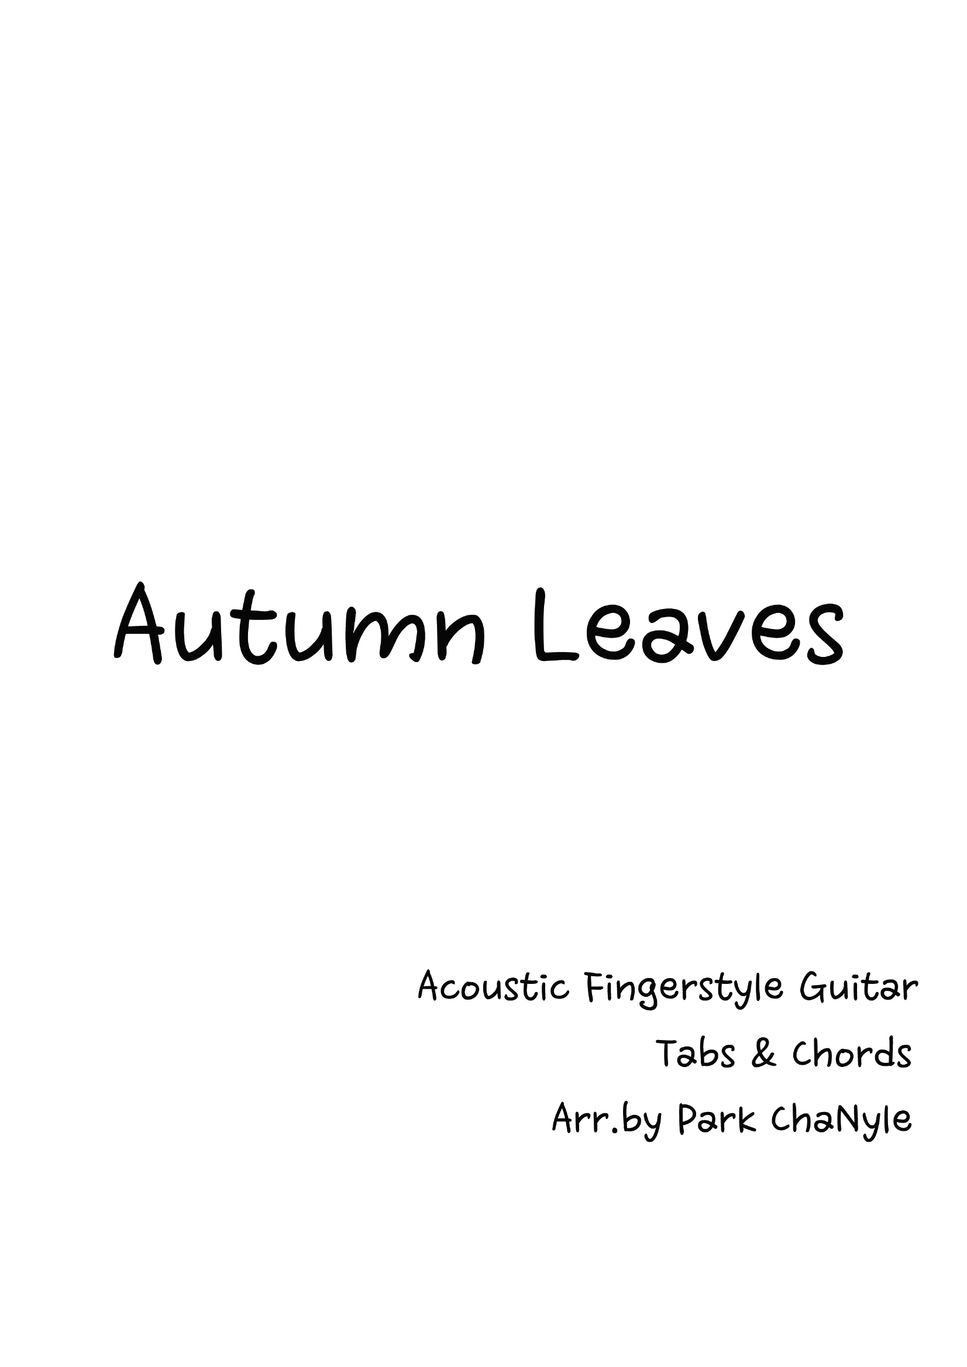 Joseph Kosma - Autumn Leaves (Jazz Fingerstyle Guitar) by Park ChaNyle